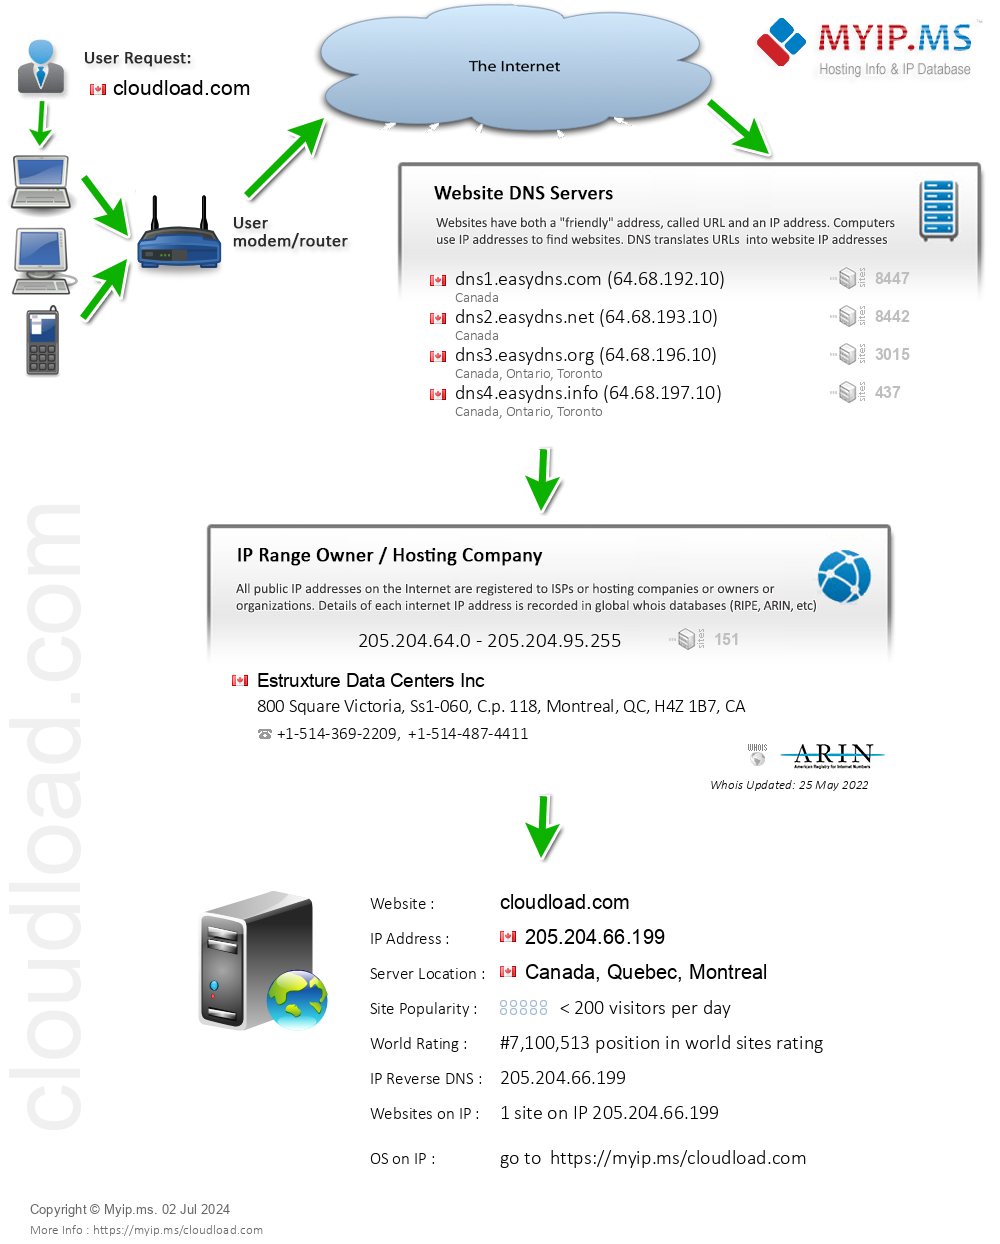 Cloudload.com - Website Hosting Visual IP Diagram